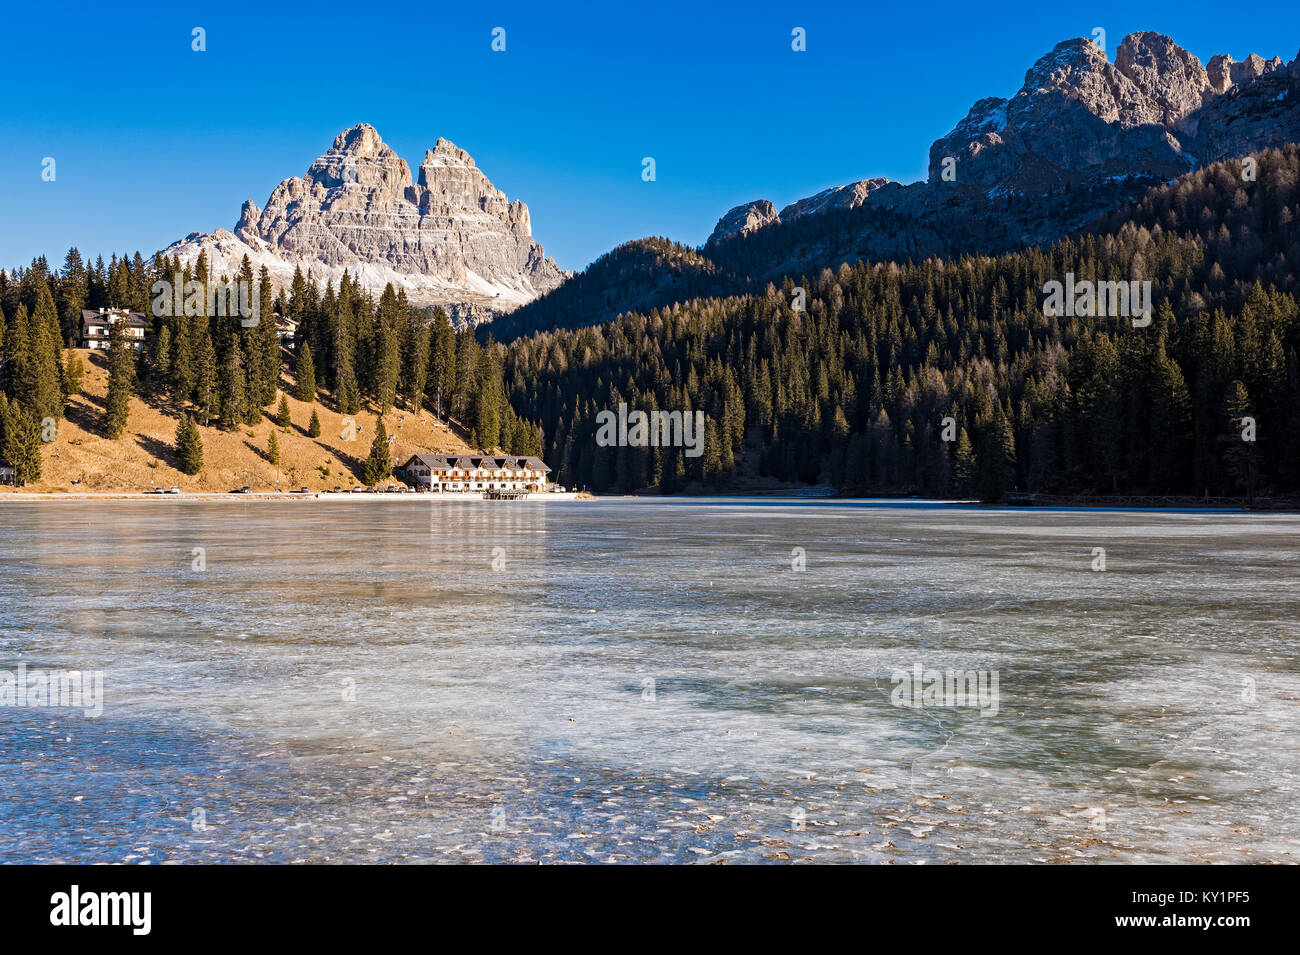 Winter landscape at the frozen Misurina lake in Italy Stock Photo